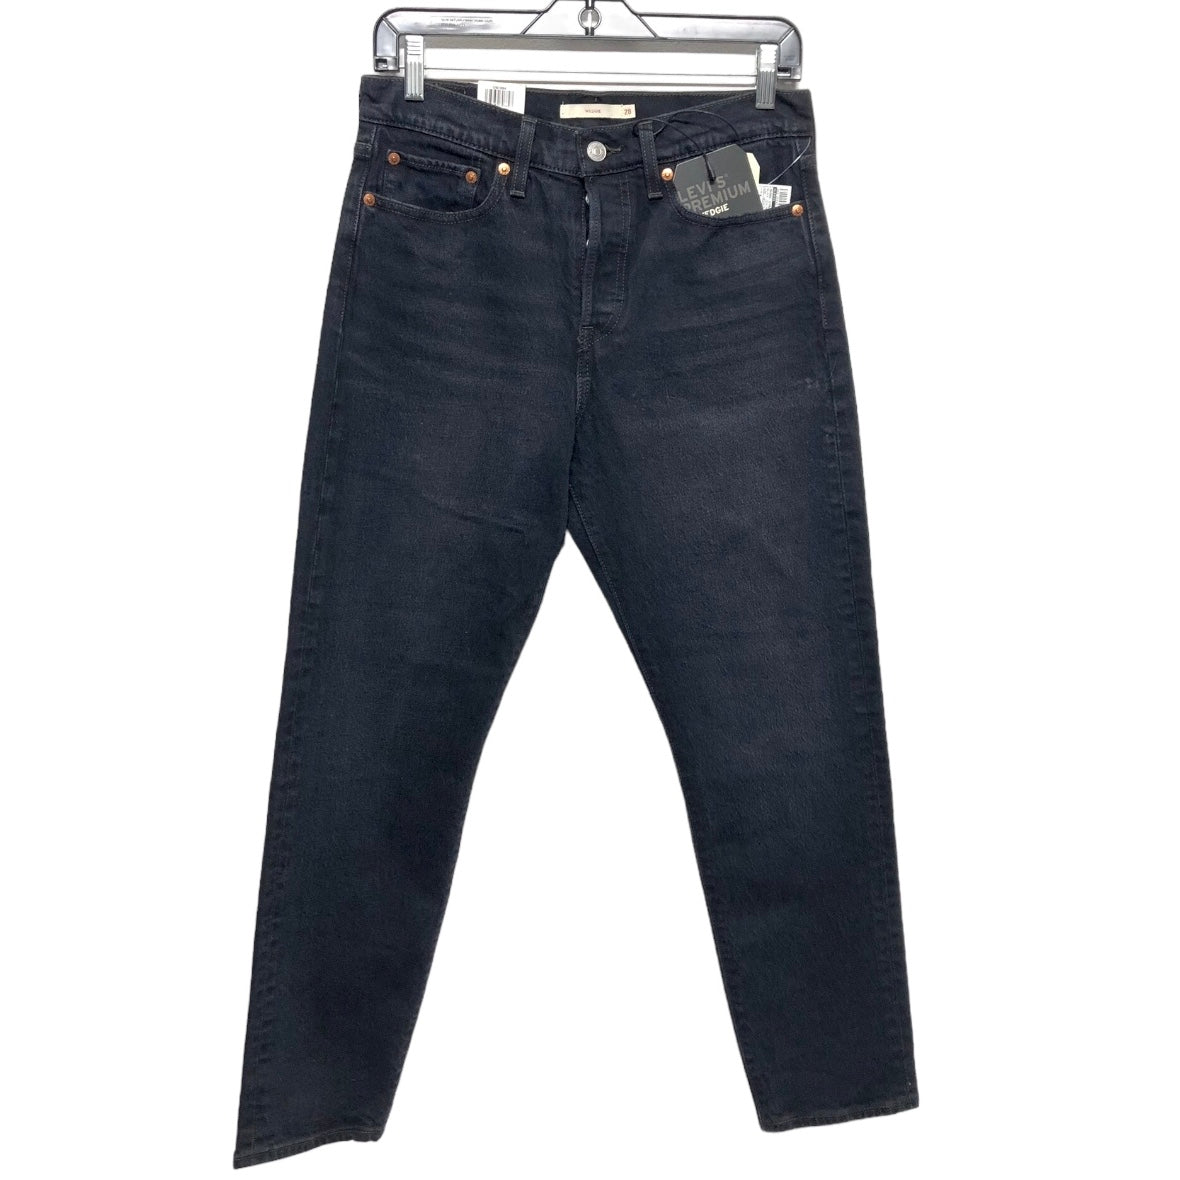 Black Denim Jeans Straight Levis, Size 6